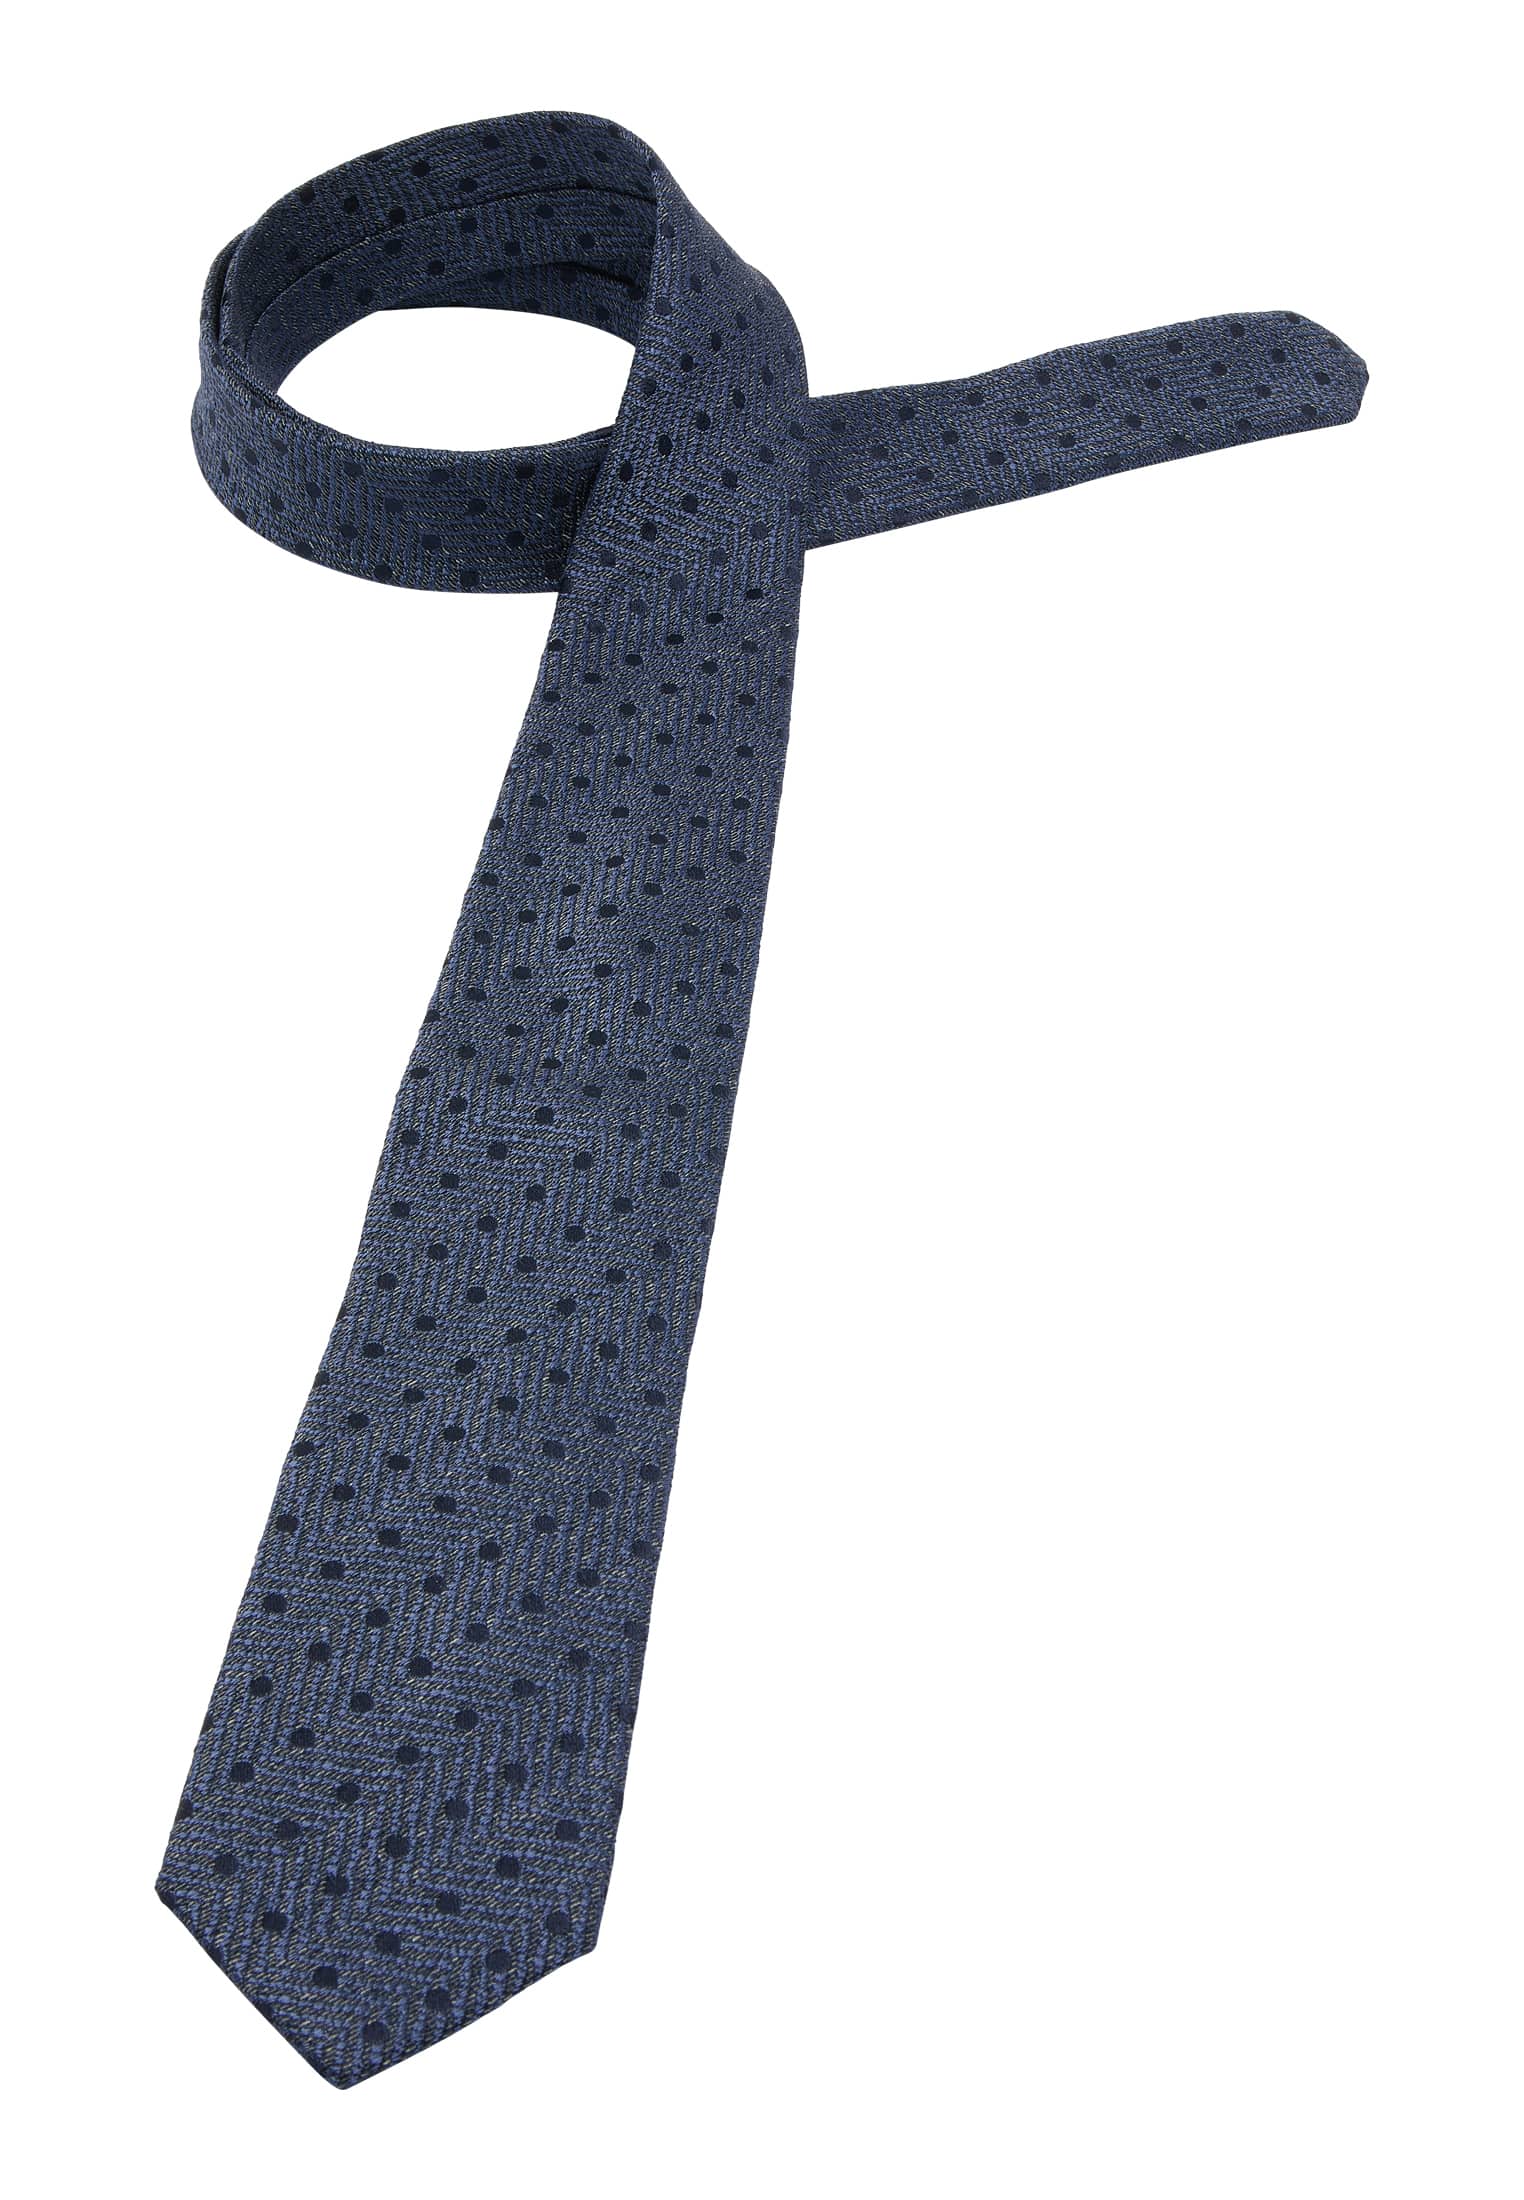 Krawatte | dunkelblau dunkelblau strukturiert 1AC01933-01-81-142 | in 142 |